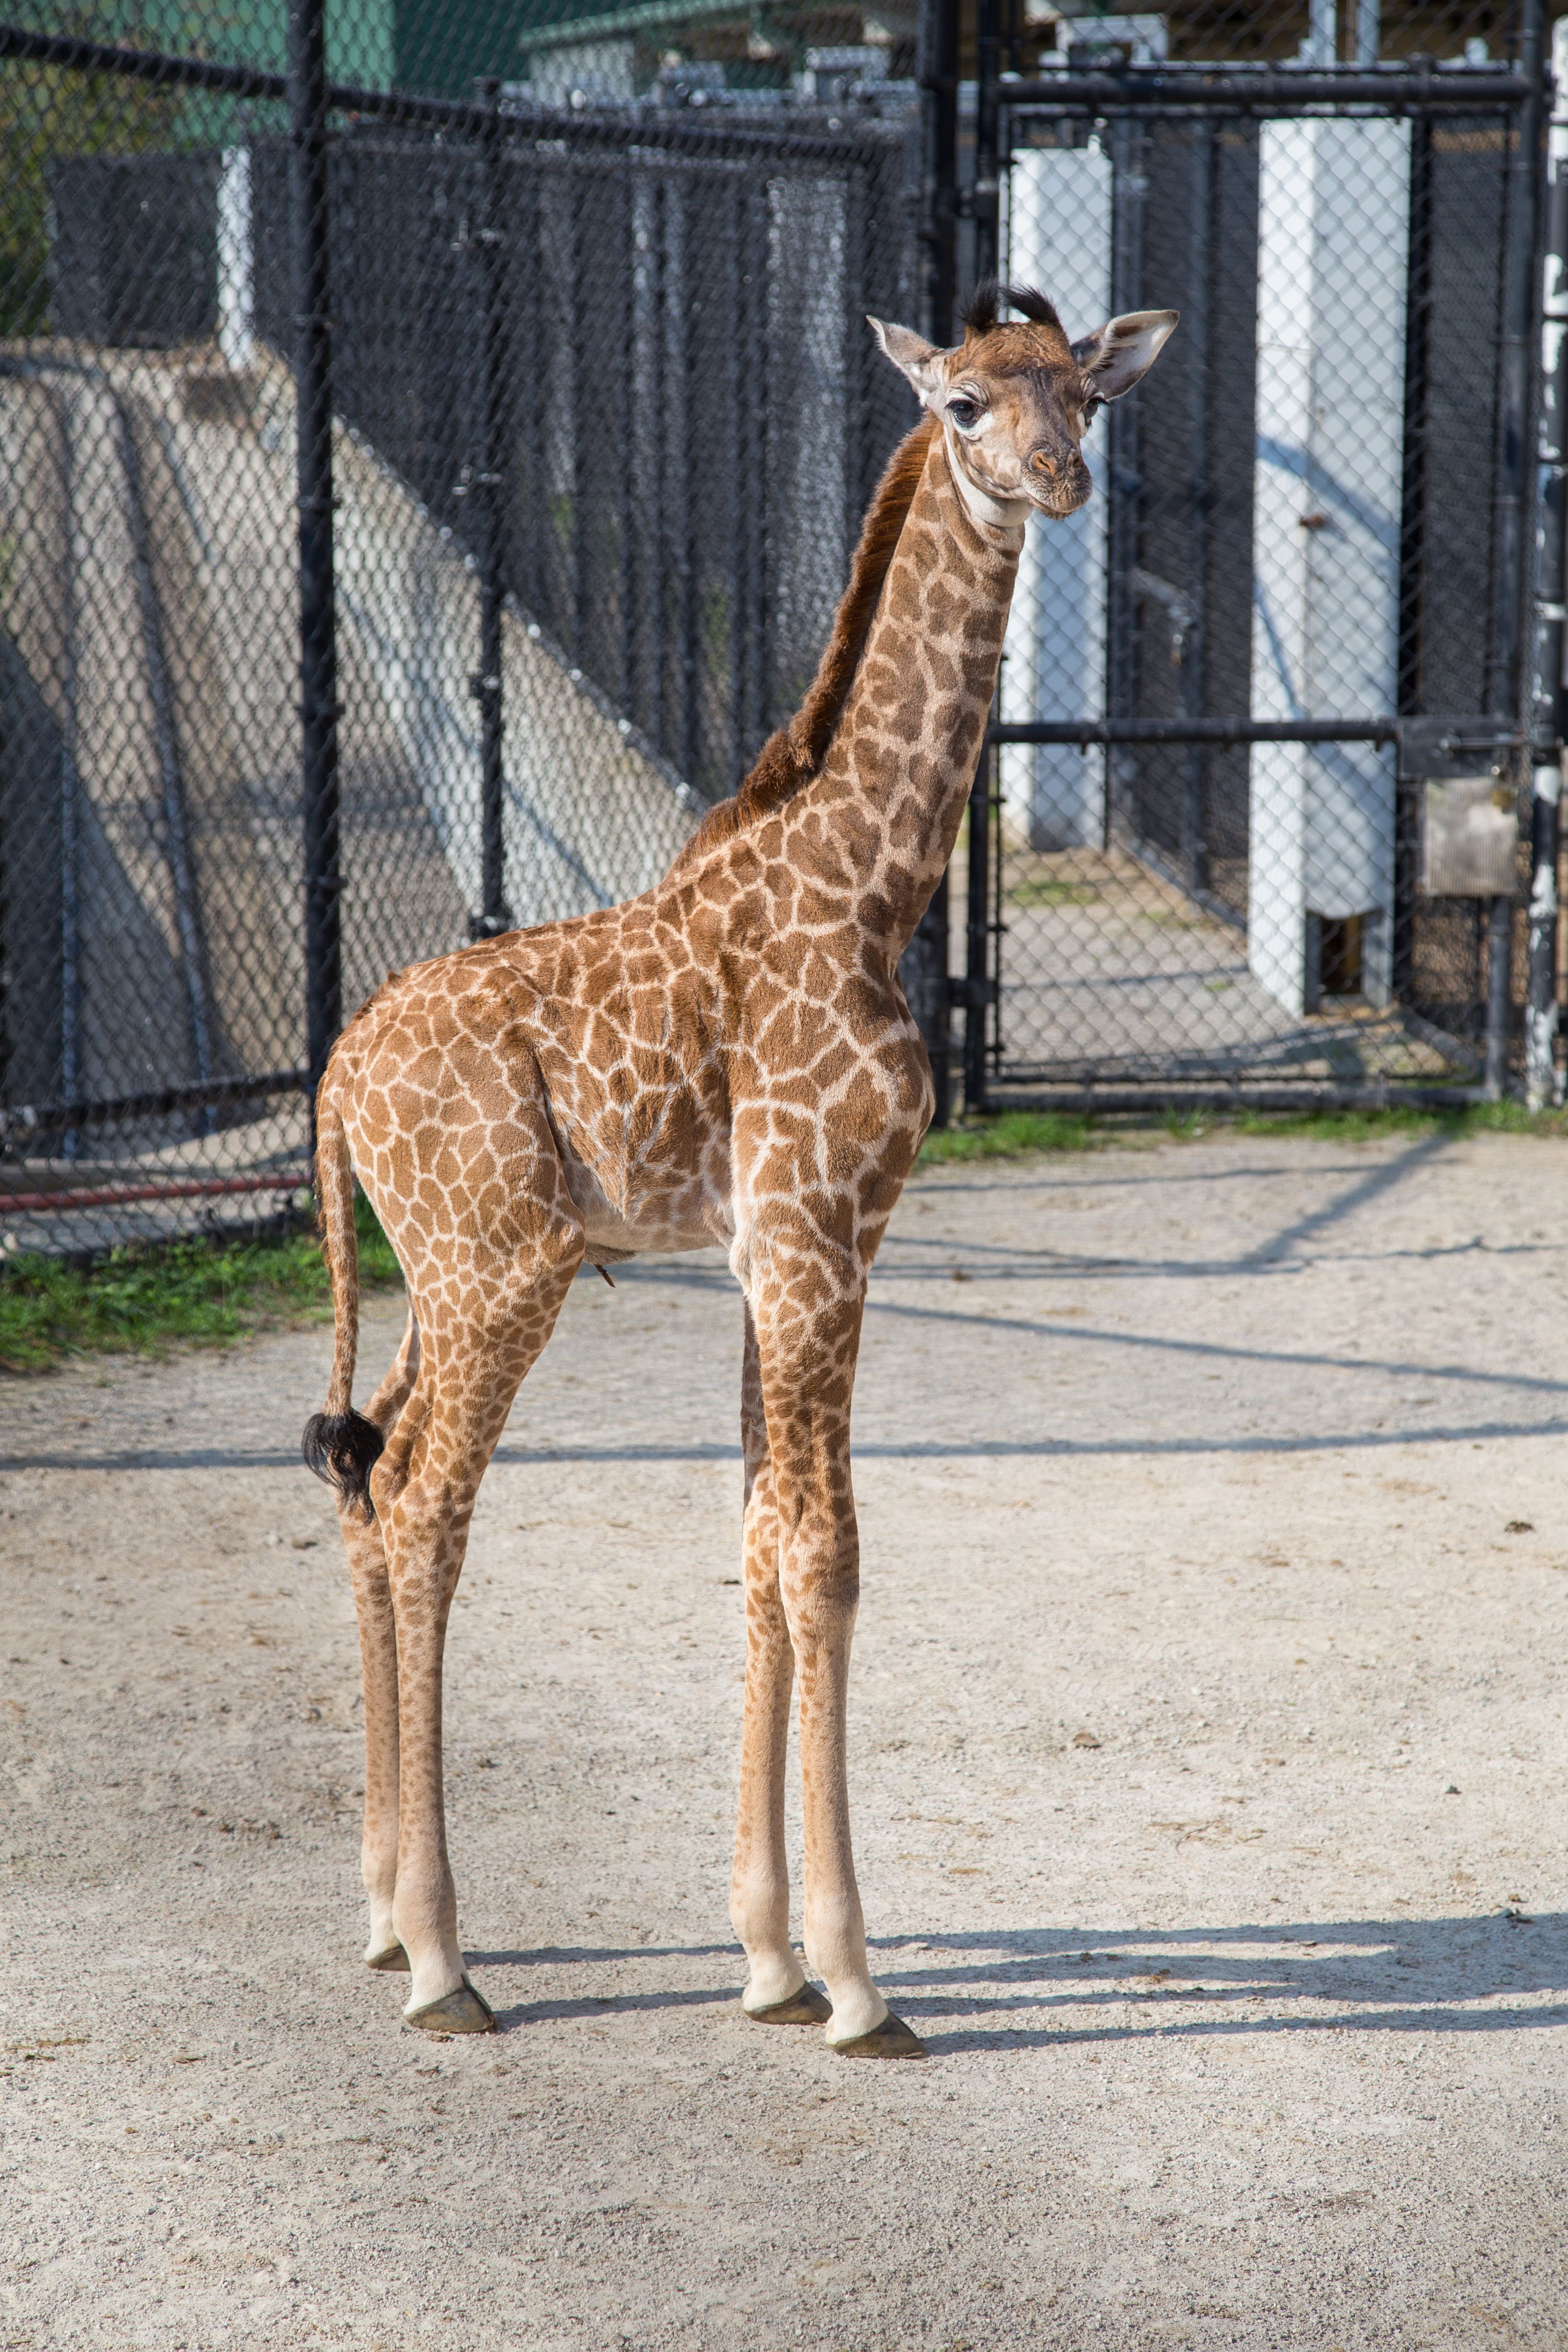 Toledo Zoo welcomes tiger cubs, baby giraffes